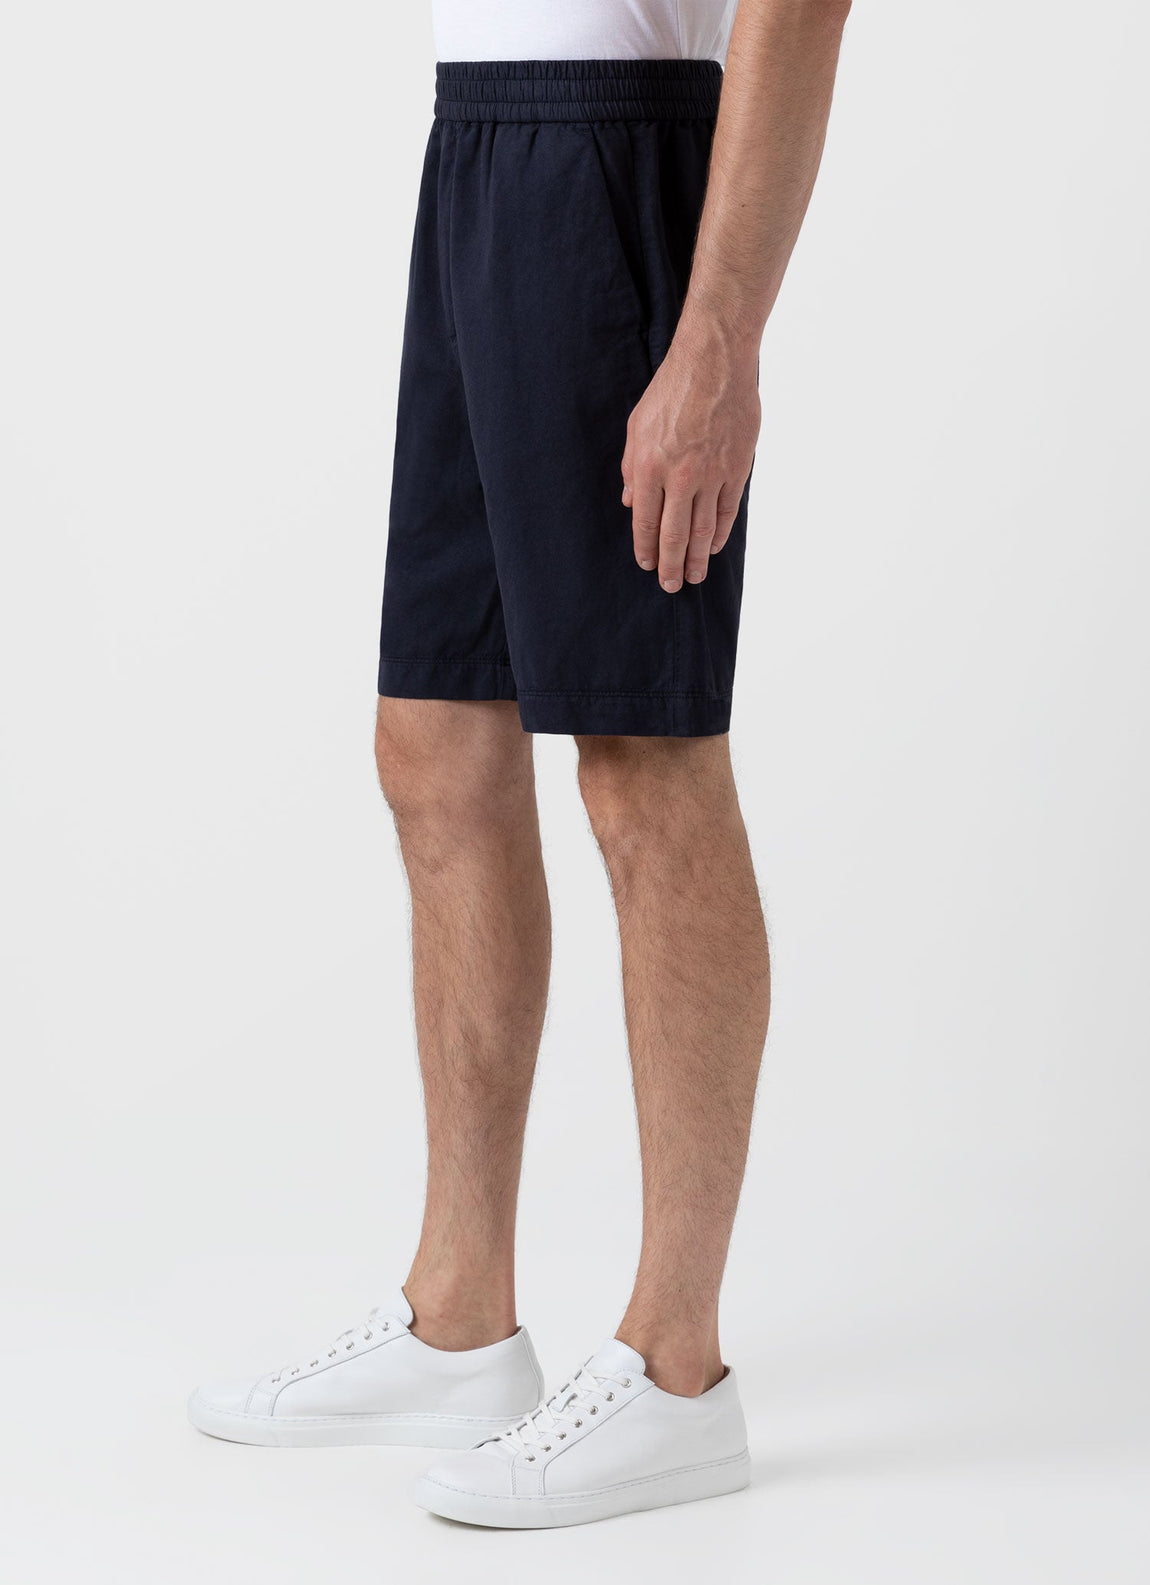 Men's Drawstring Shorts